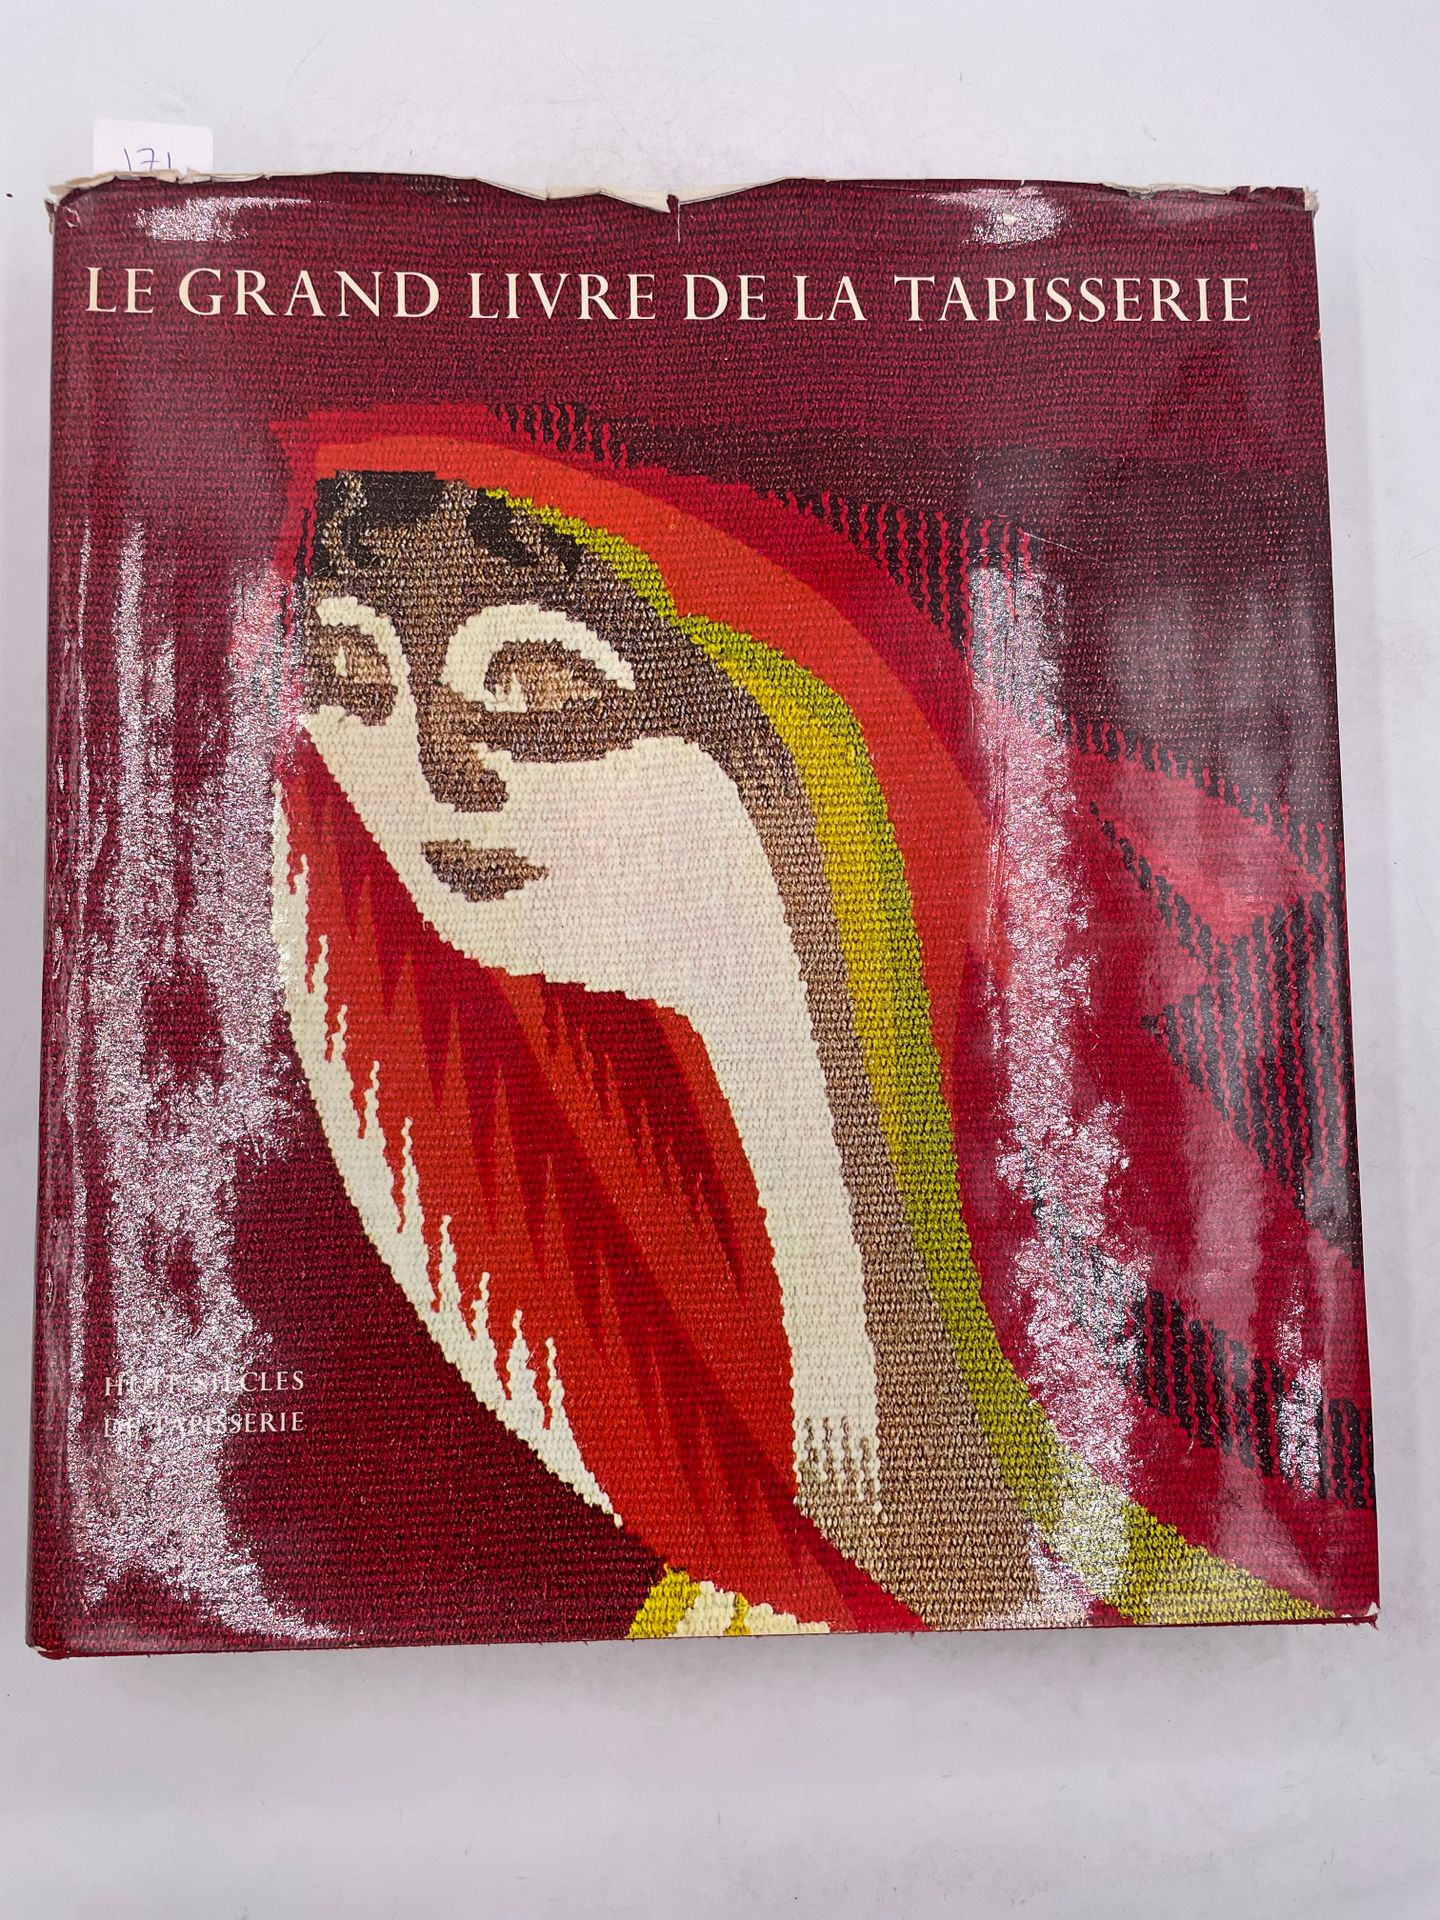 Null "Le grand livre de la tapisserie", Pierre Verlet und mehrere Autoren, Ed. B&hellip;